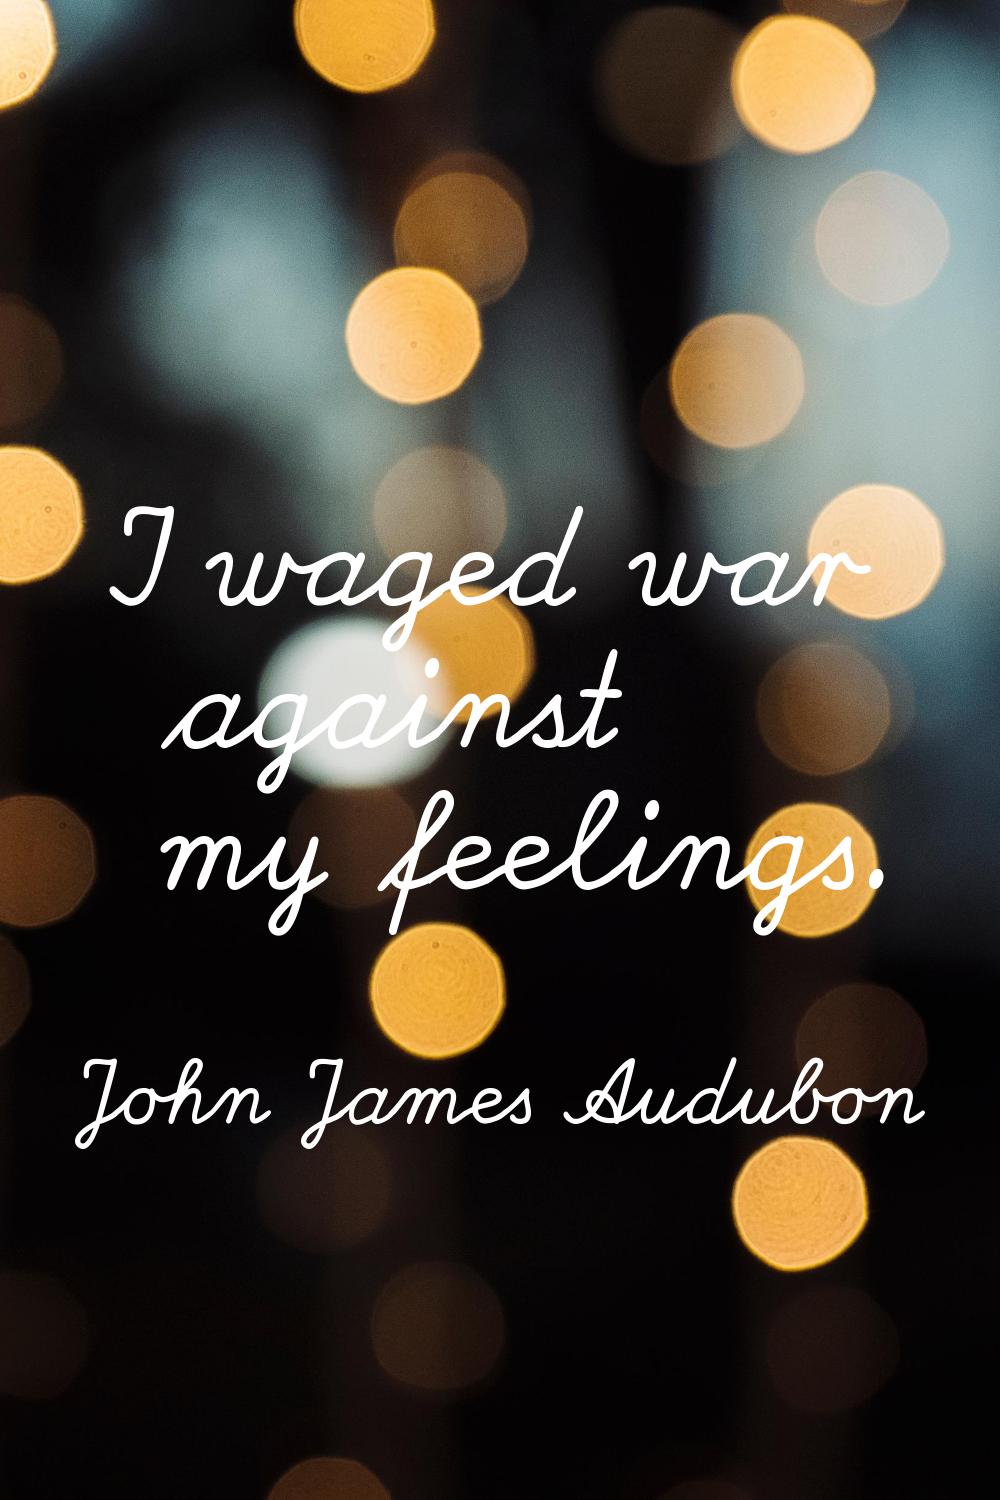 I waged war against my feelings.